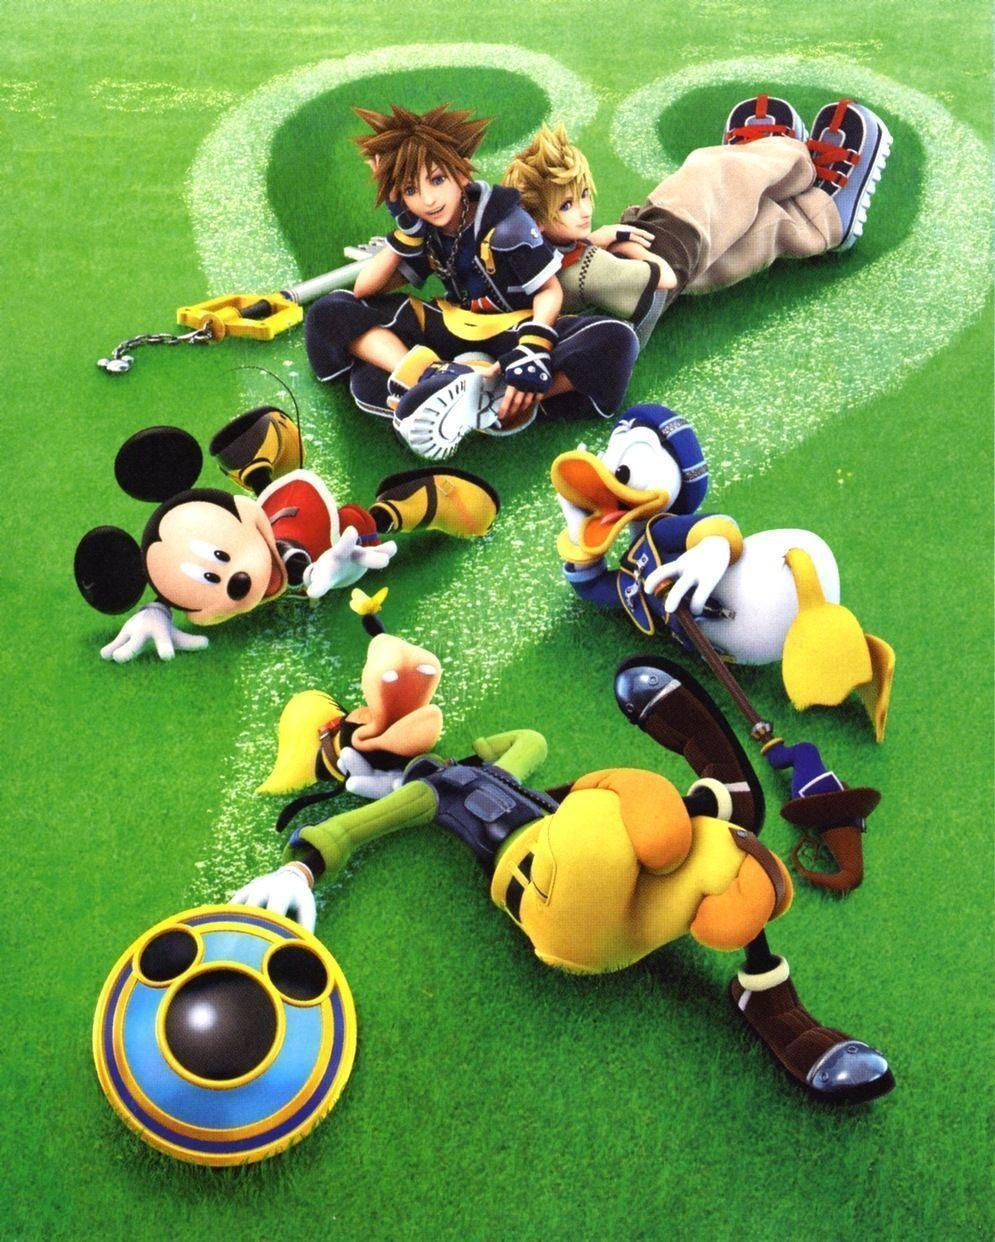 Kingdom Hearts 2 Final Mix Cover